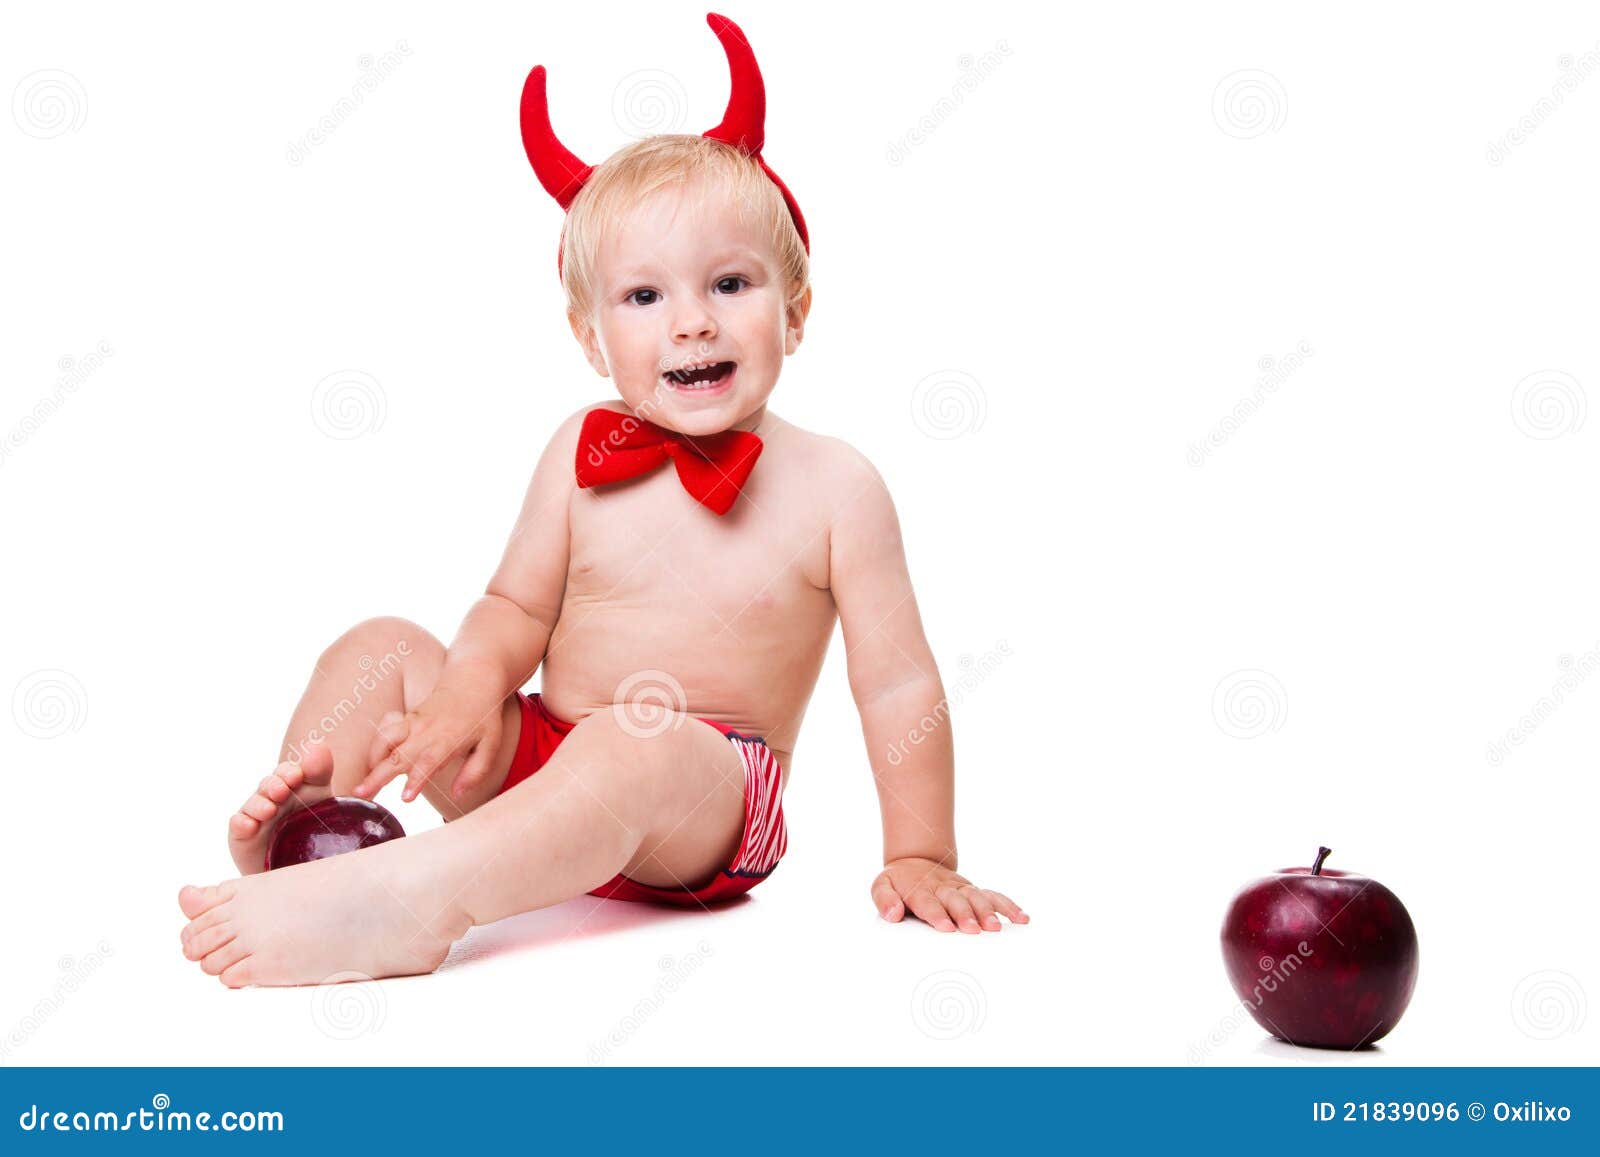 kid in red suit of tempting devil